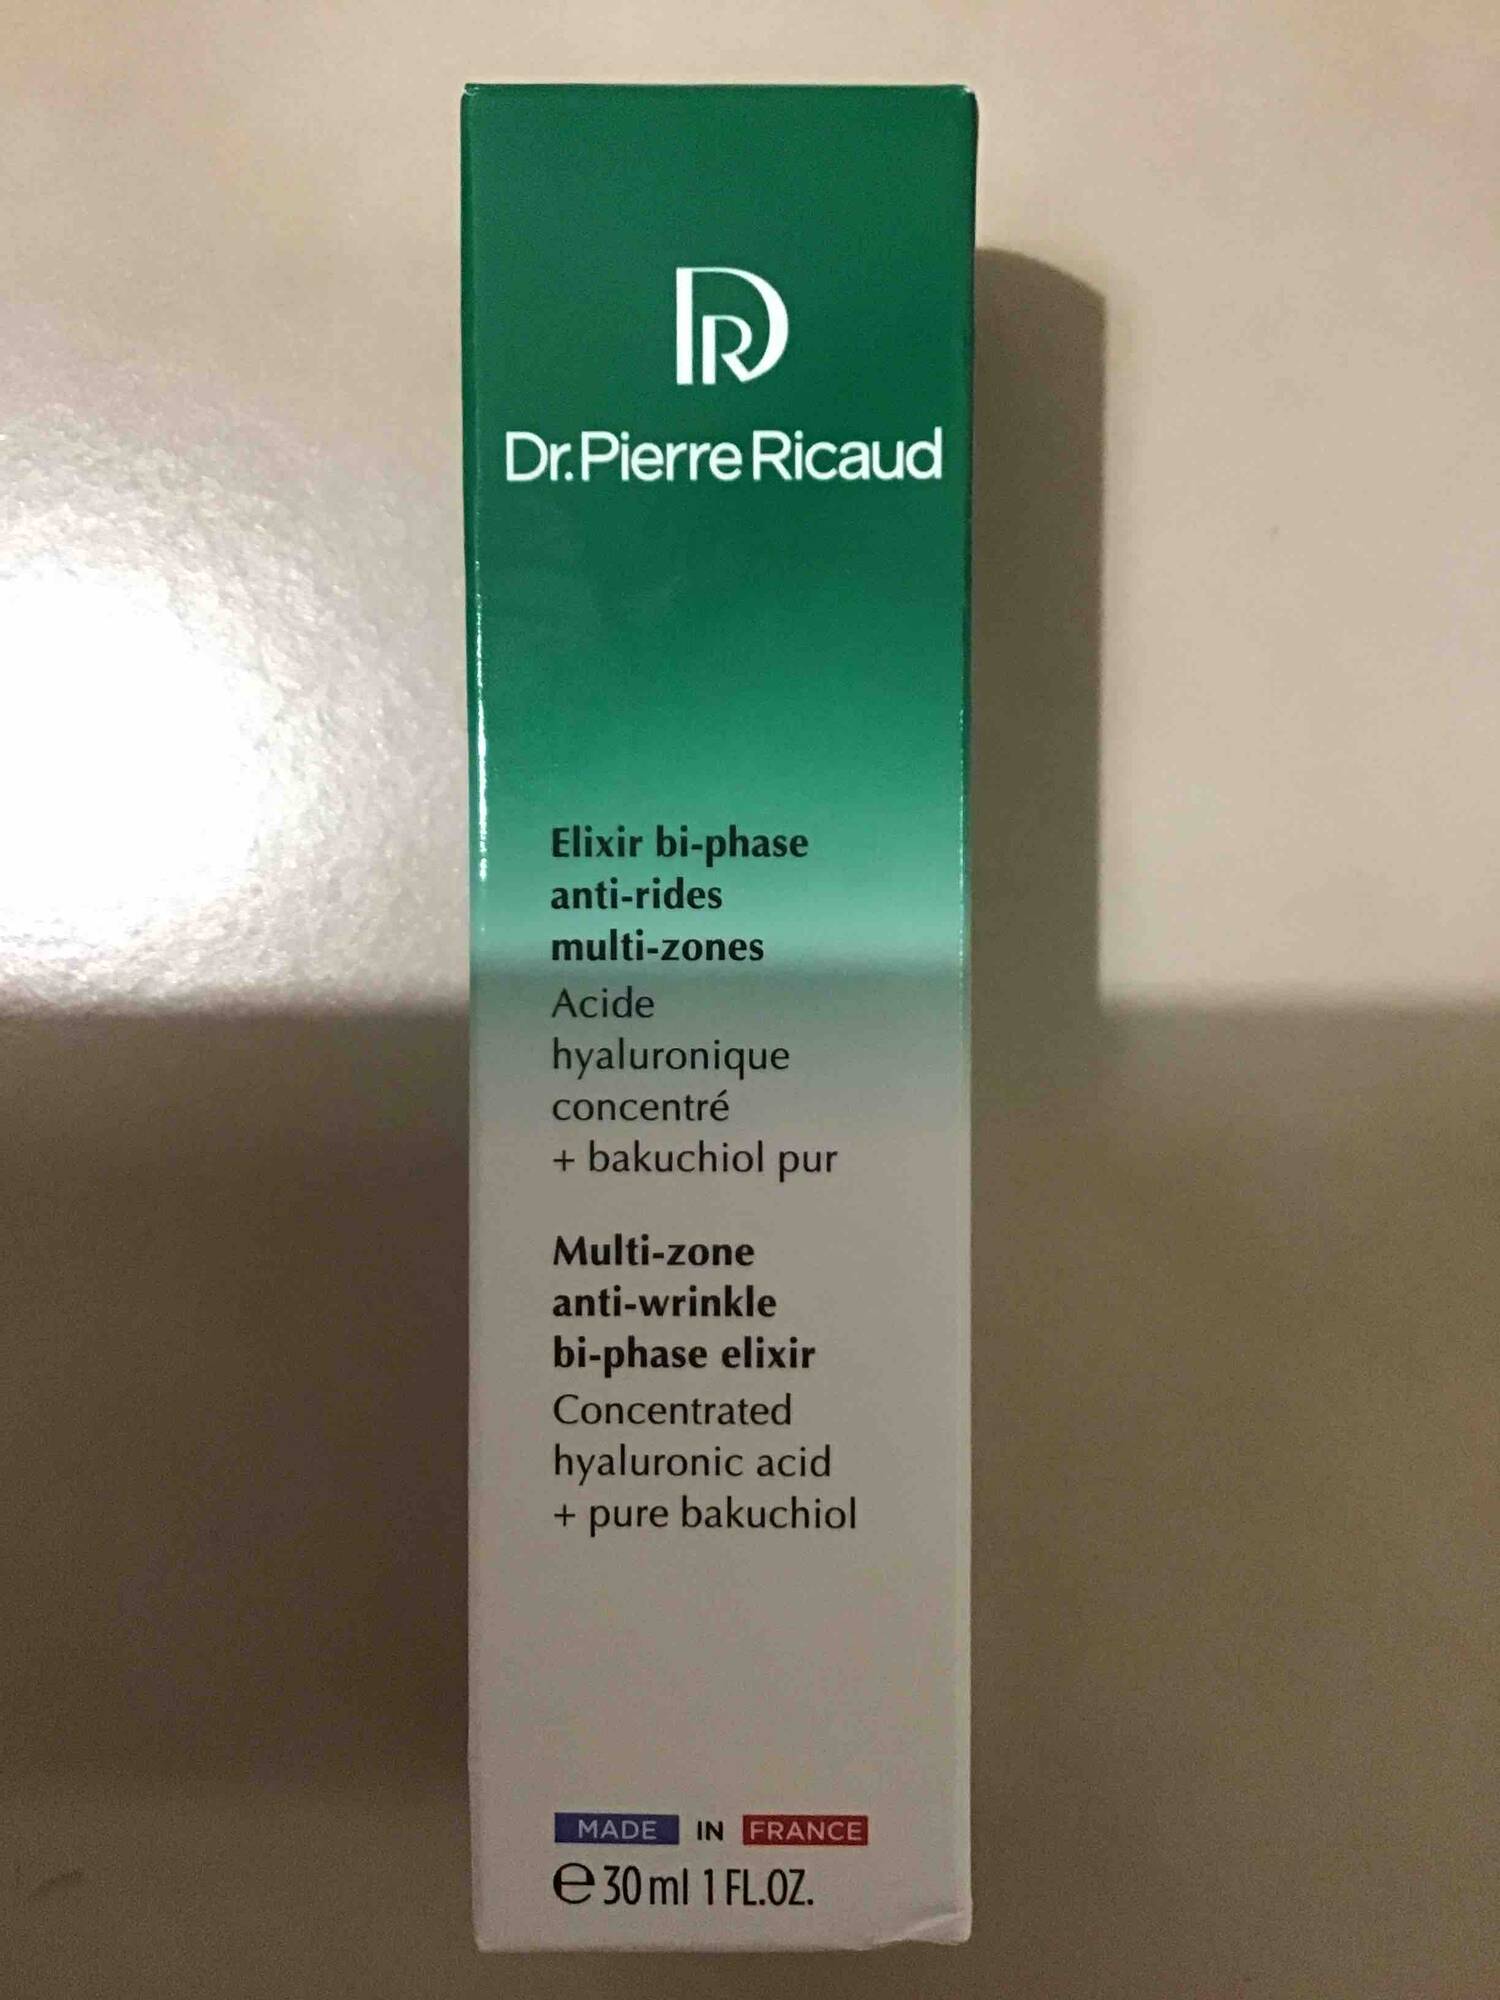 DR PIERRE RICAUD - Multi-zone anti-wrinkle bi-phase elixir